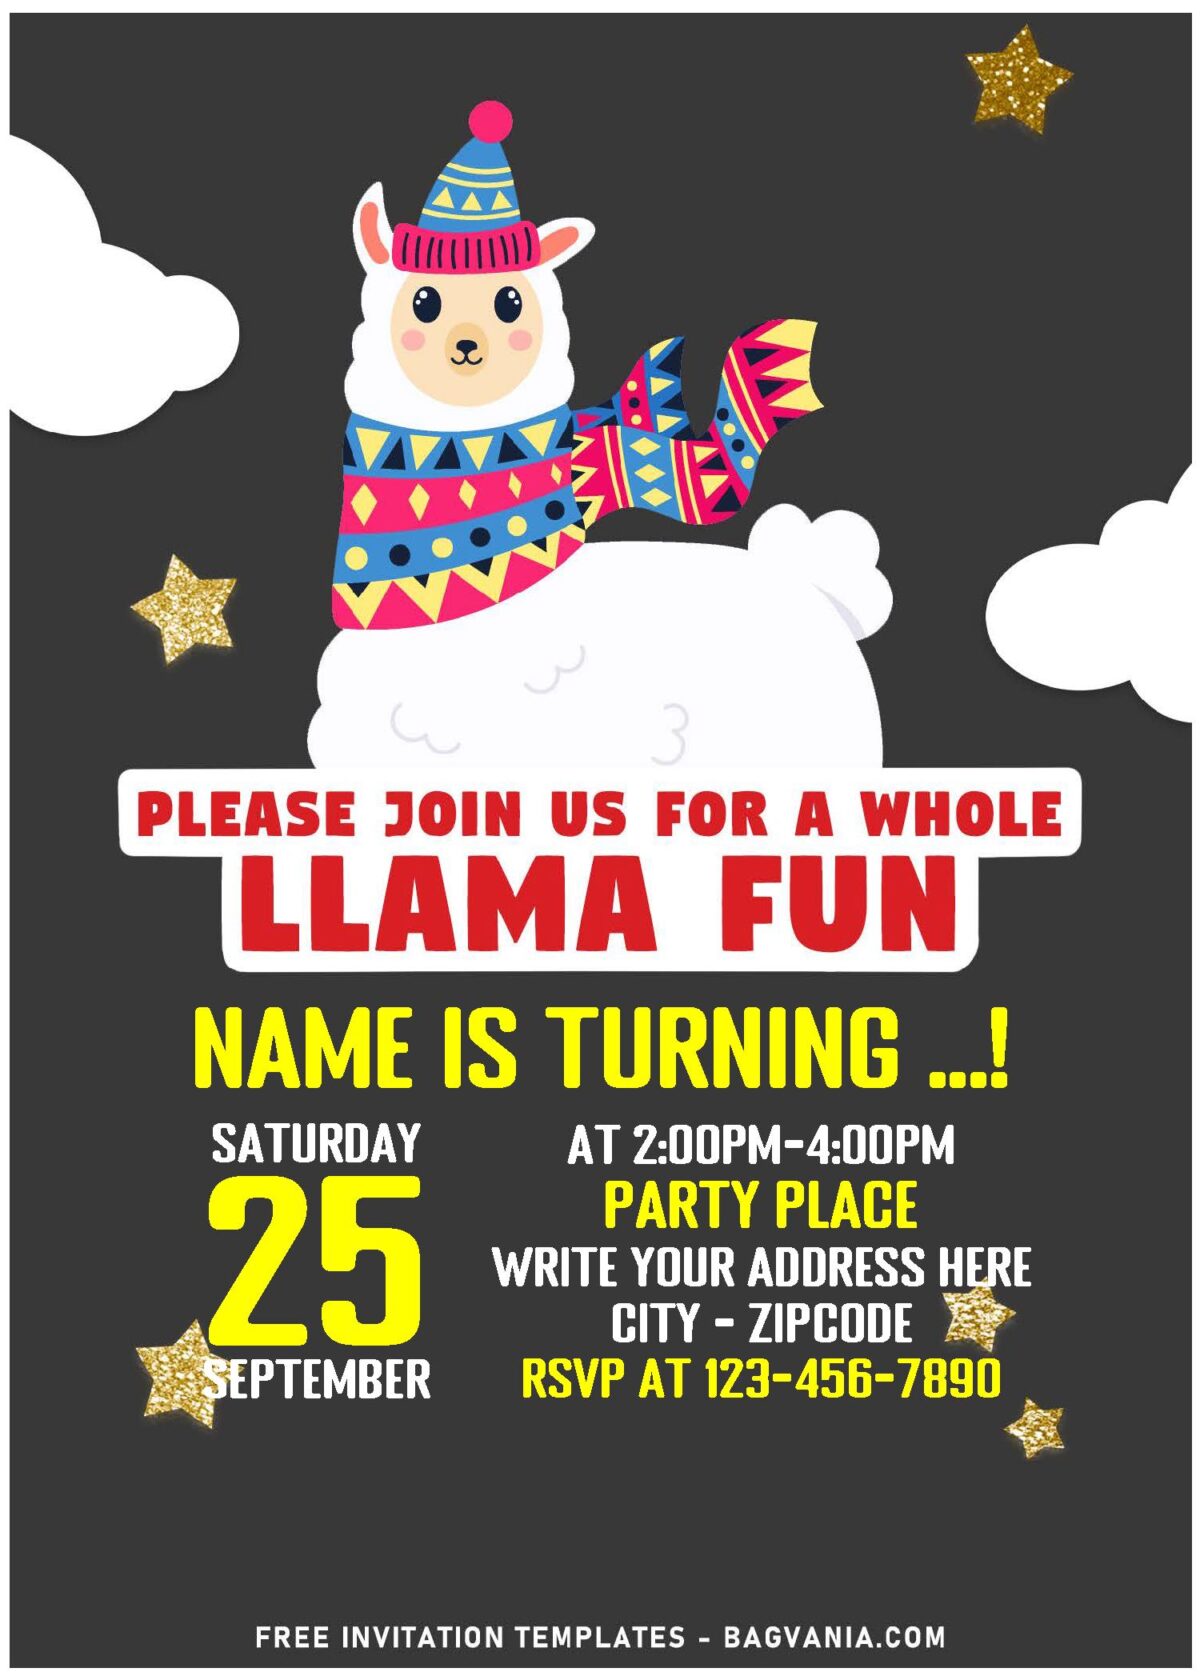 (Free Editable PDF) Super Cute Llama Party-Rama Birthday Invitation Templates with colorful scarf